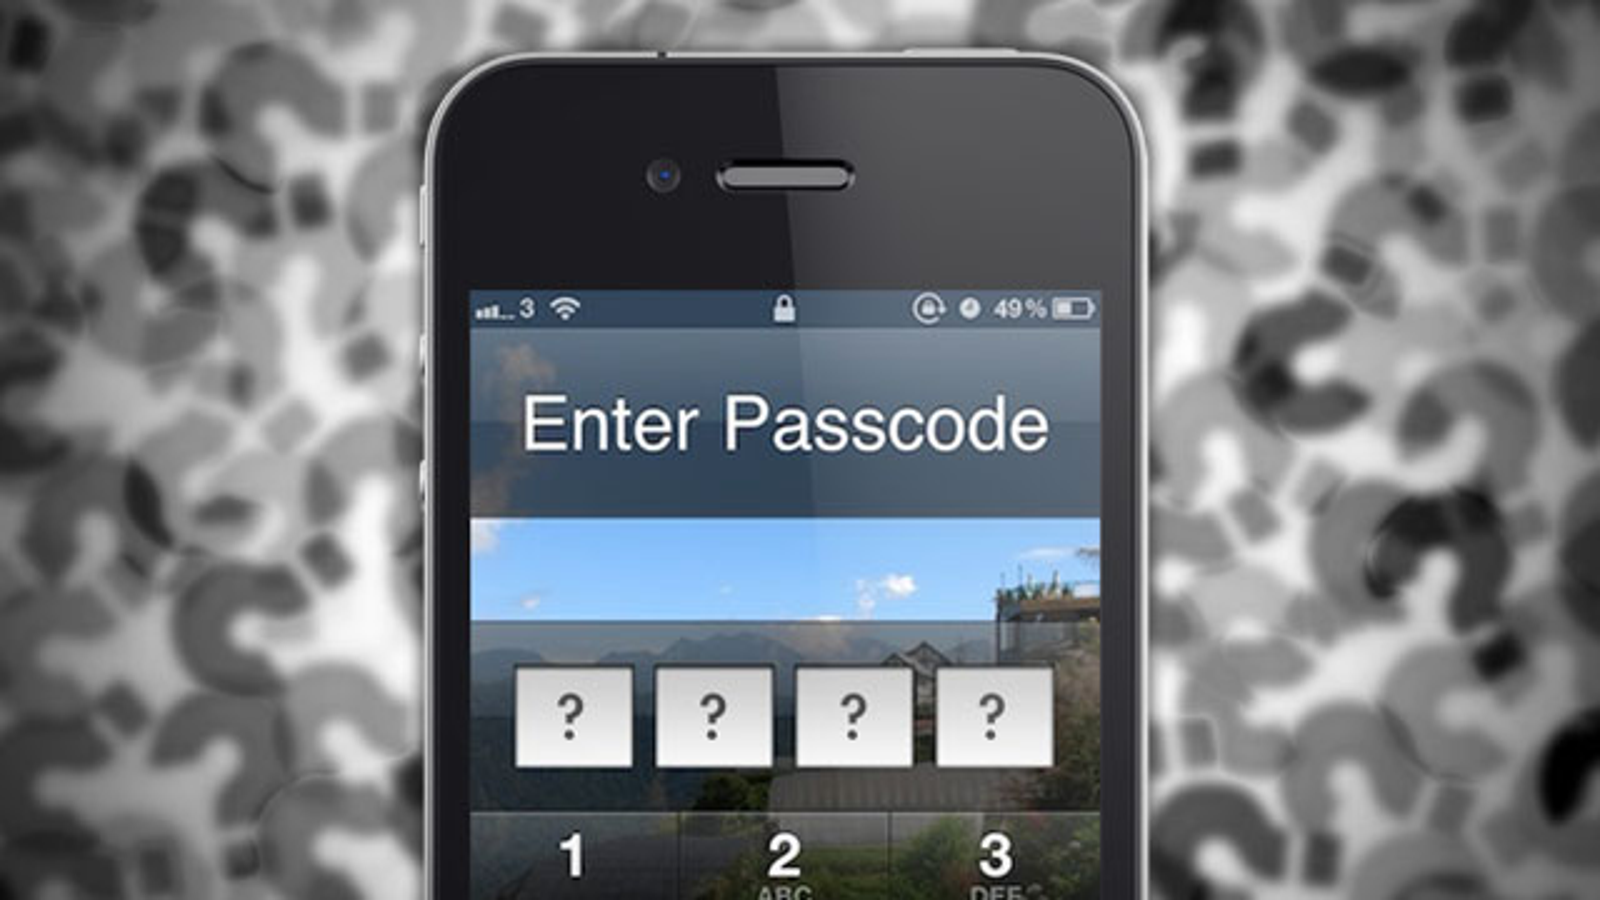 iphone passcode reset tool